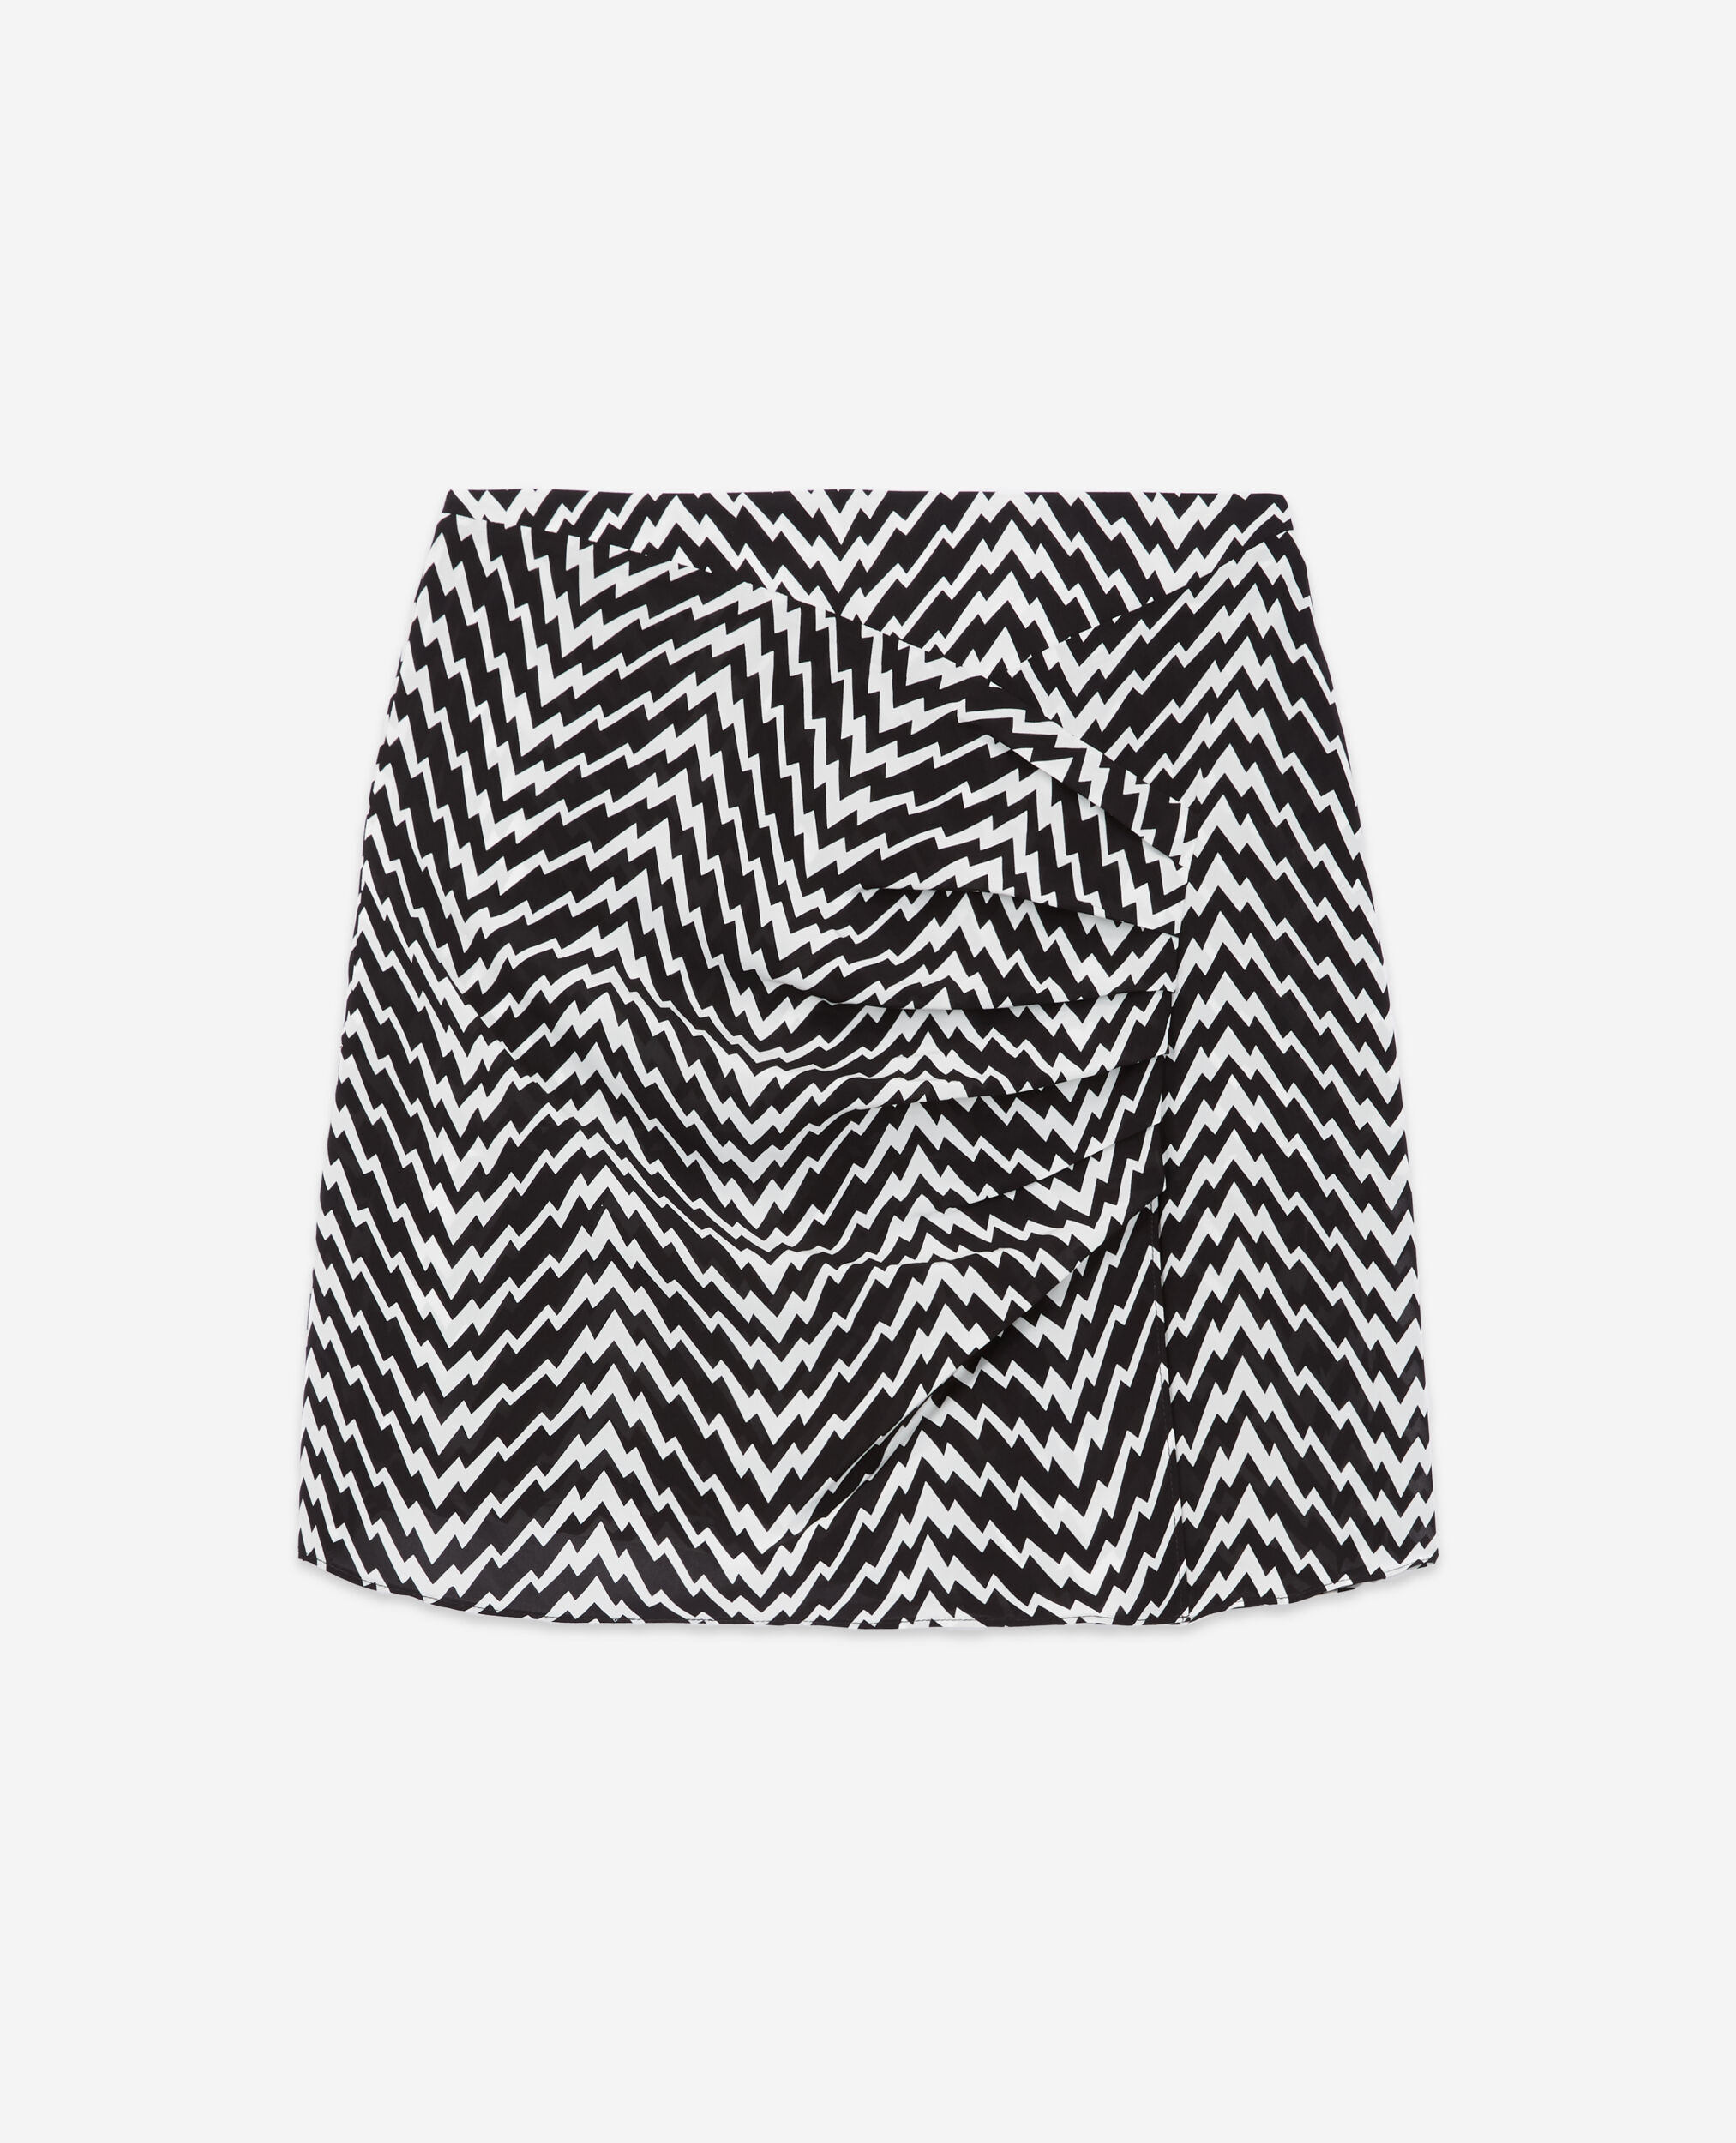 BNWT Zara Pink Draped Satin Tie Dye Midi Skirt Size Medium | eBay